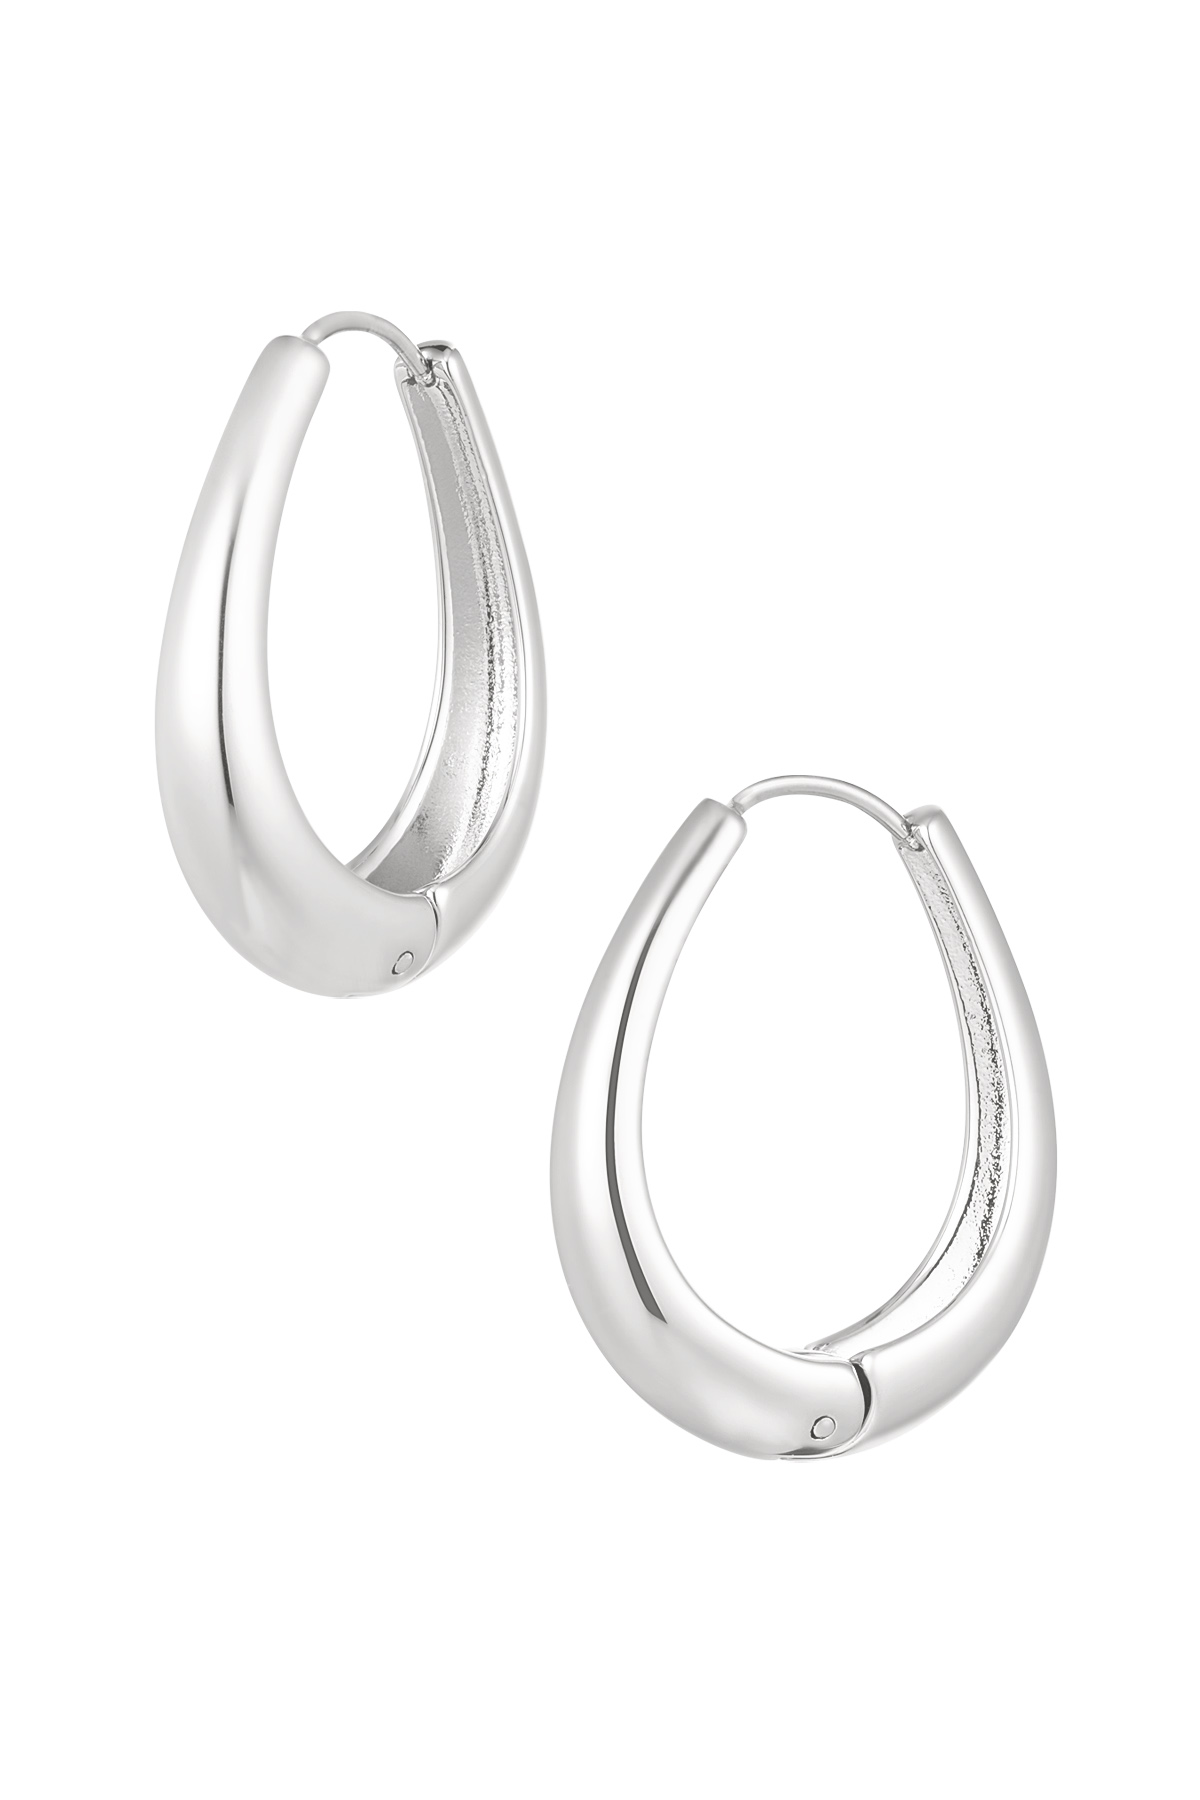 Earrings classy oval - Silver Stainless Steel h5 